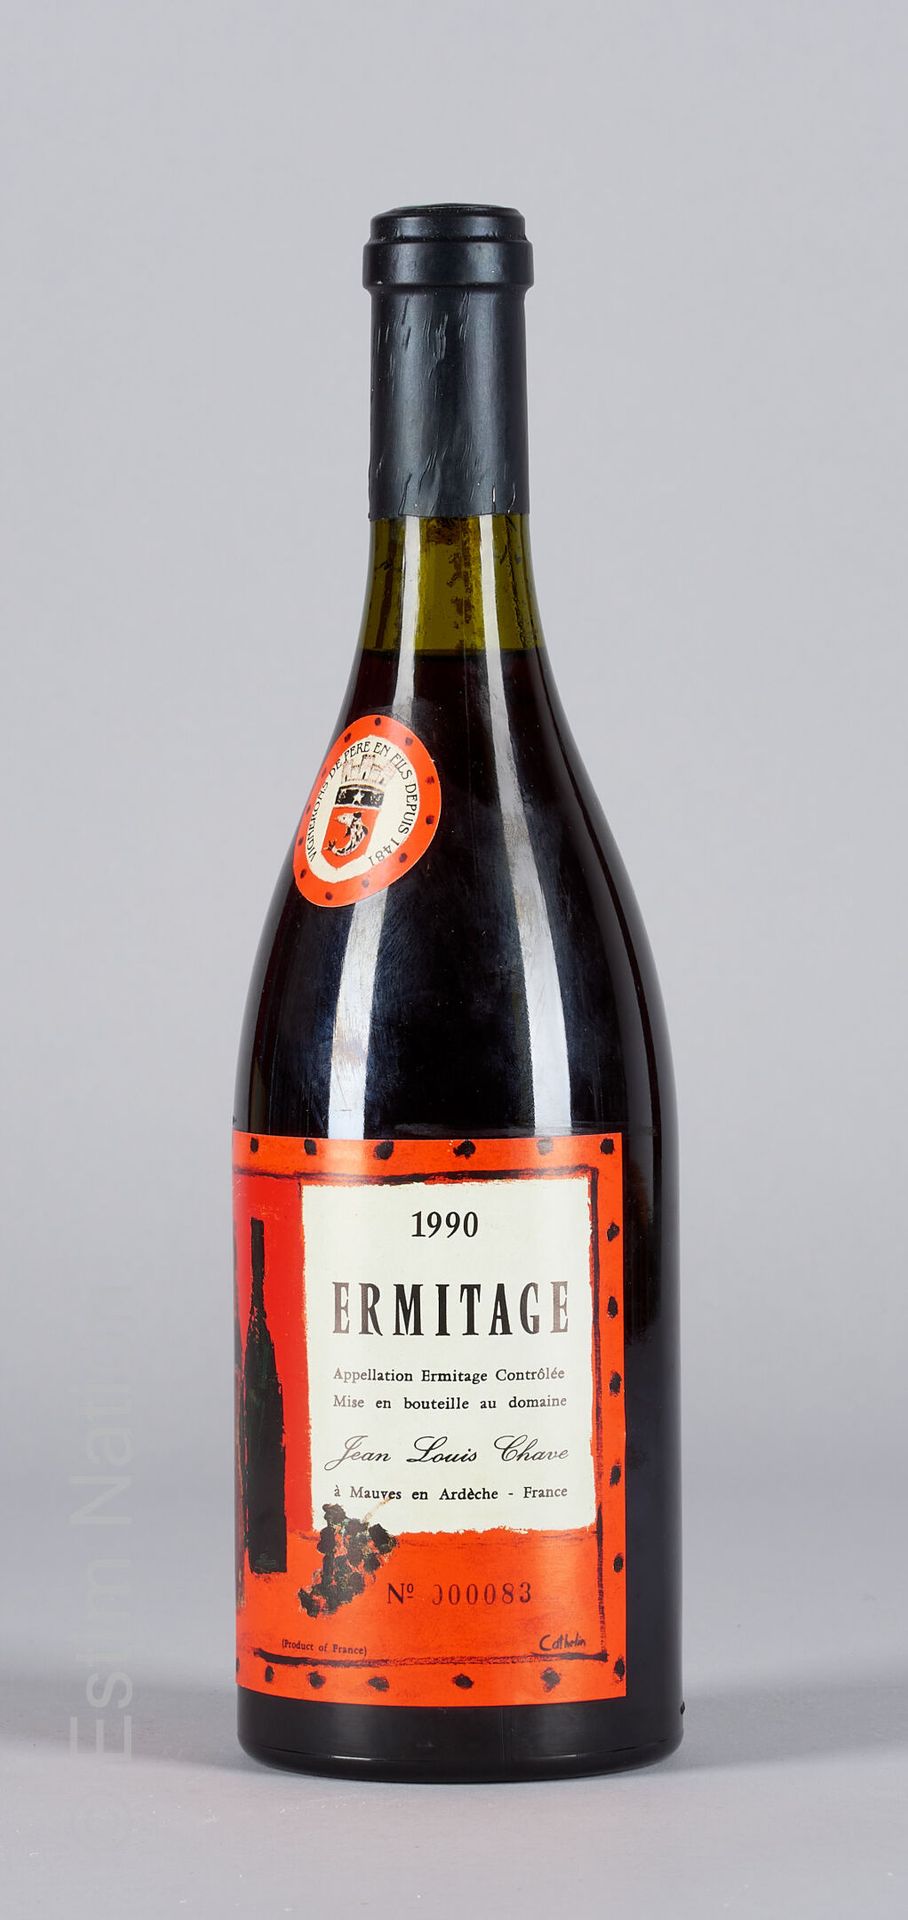 CUVEE CATHELIN 1瓶ERMITAGE 1990 Cuvée Cathelin Jean-Louis Chave

(N. 在2,5和3厘米之间)